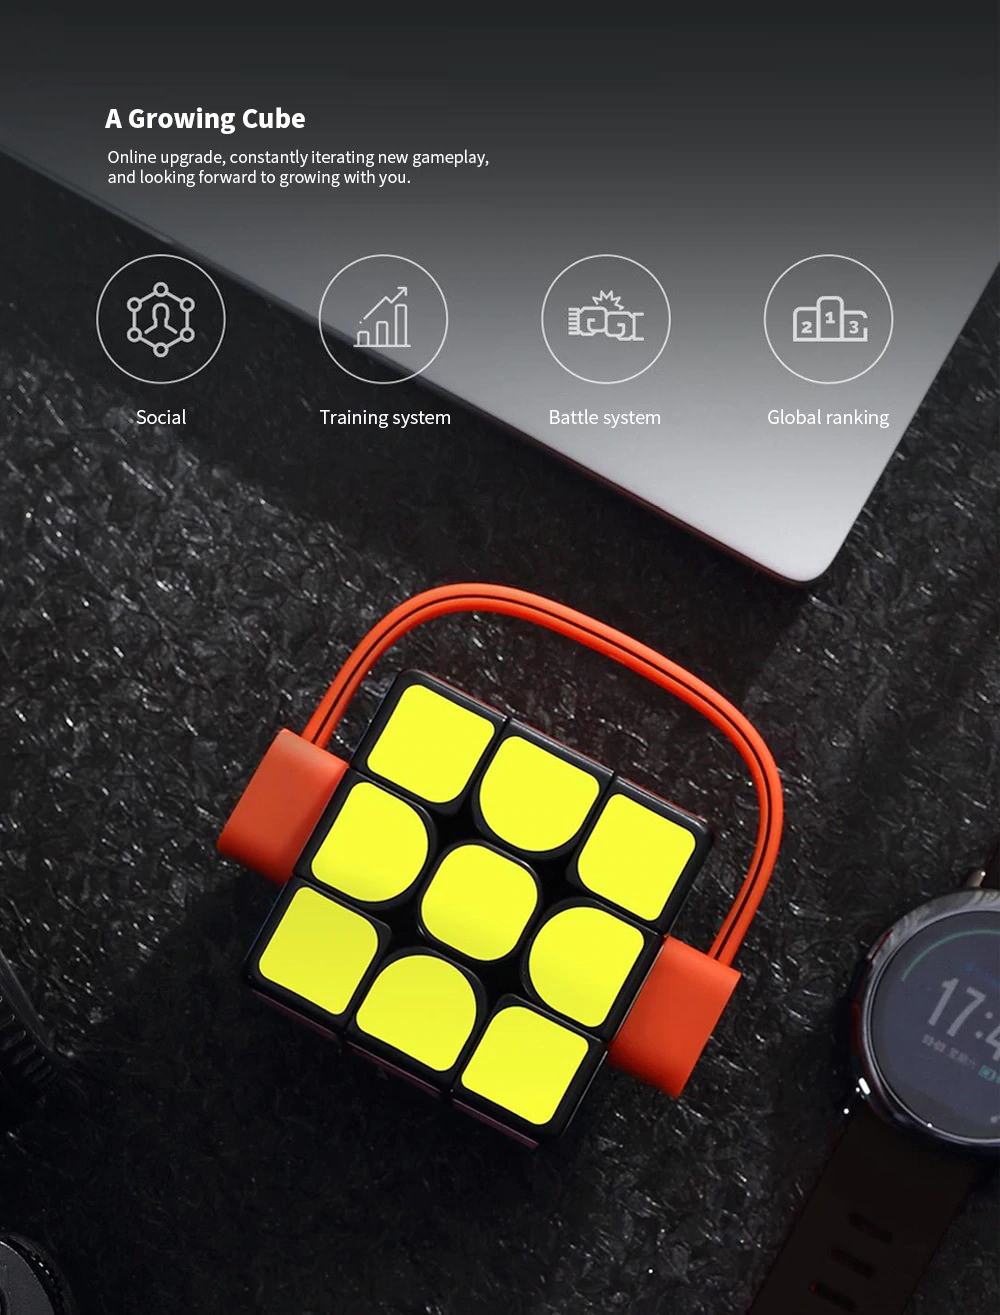 xiaomi giiker i3 smart cube 2019